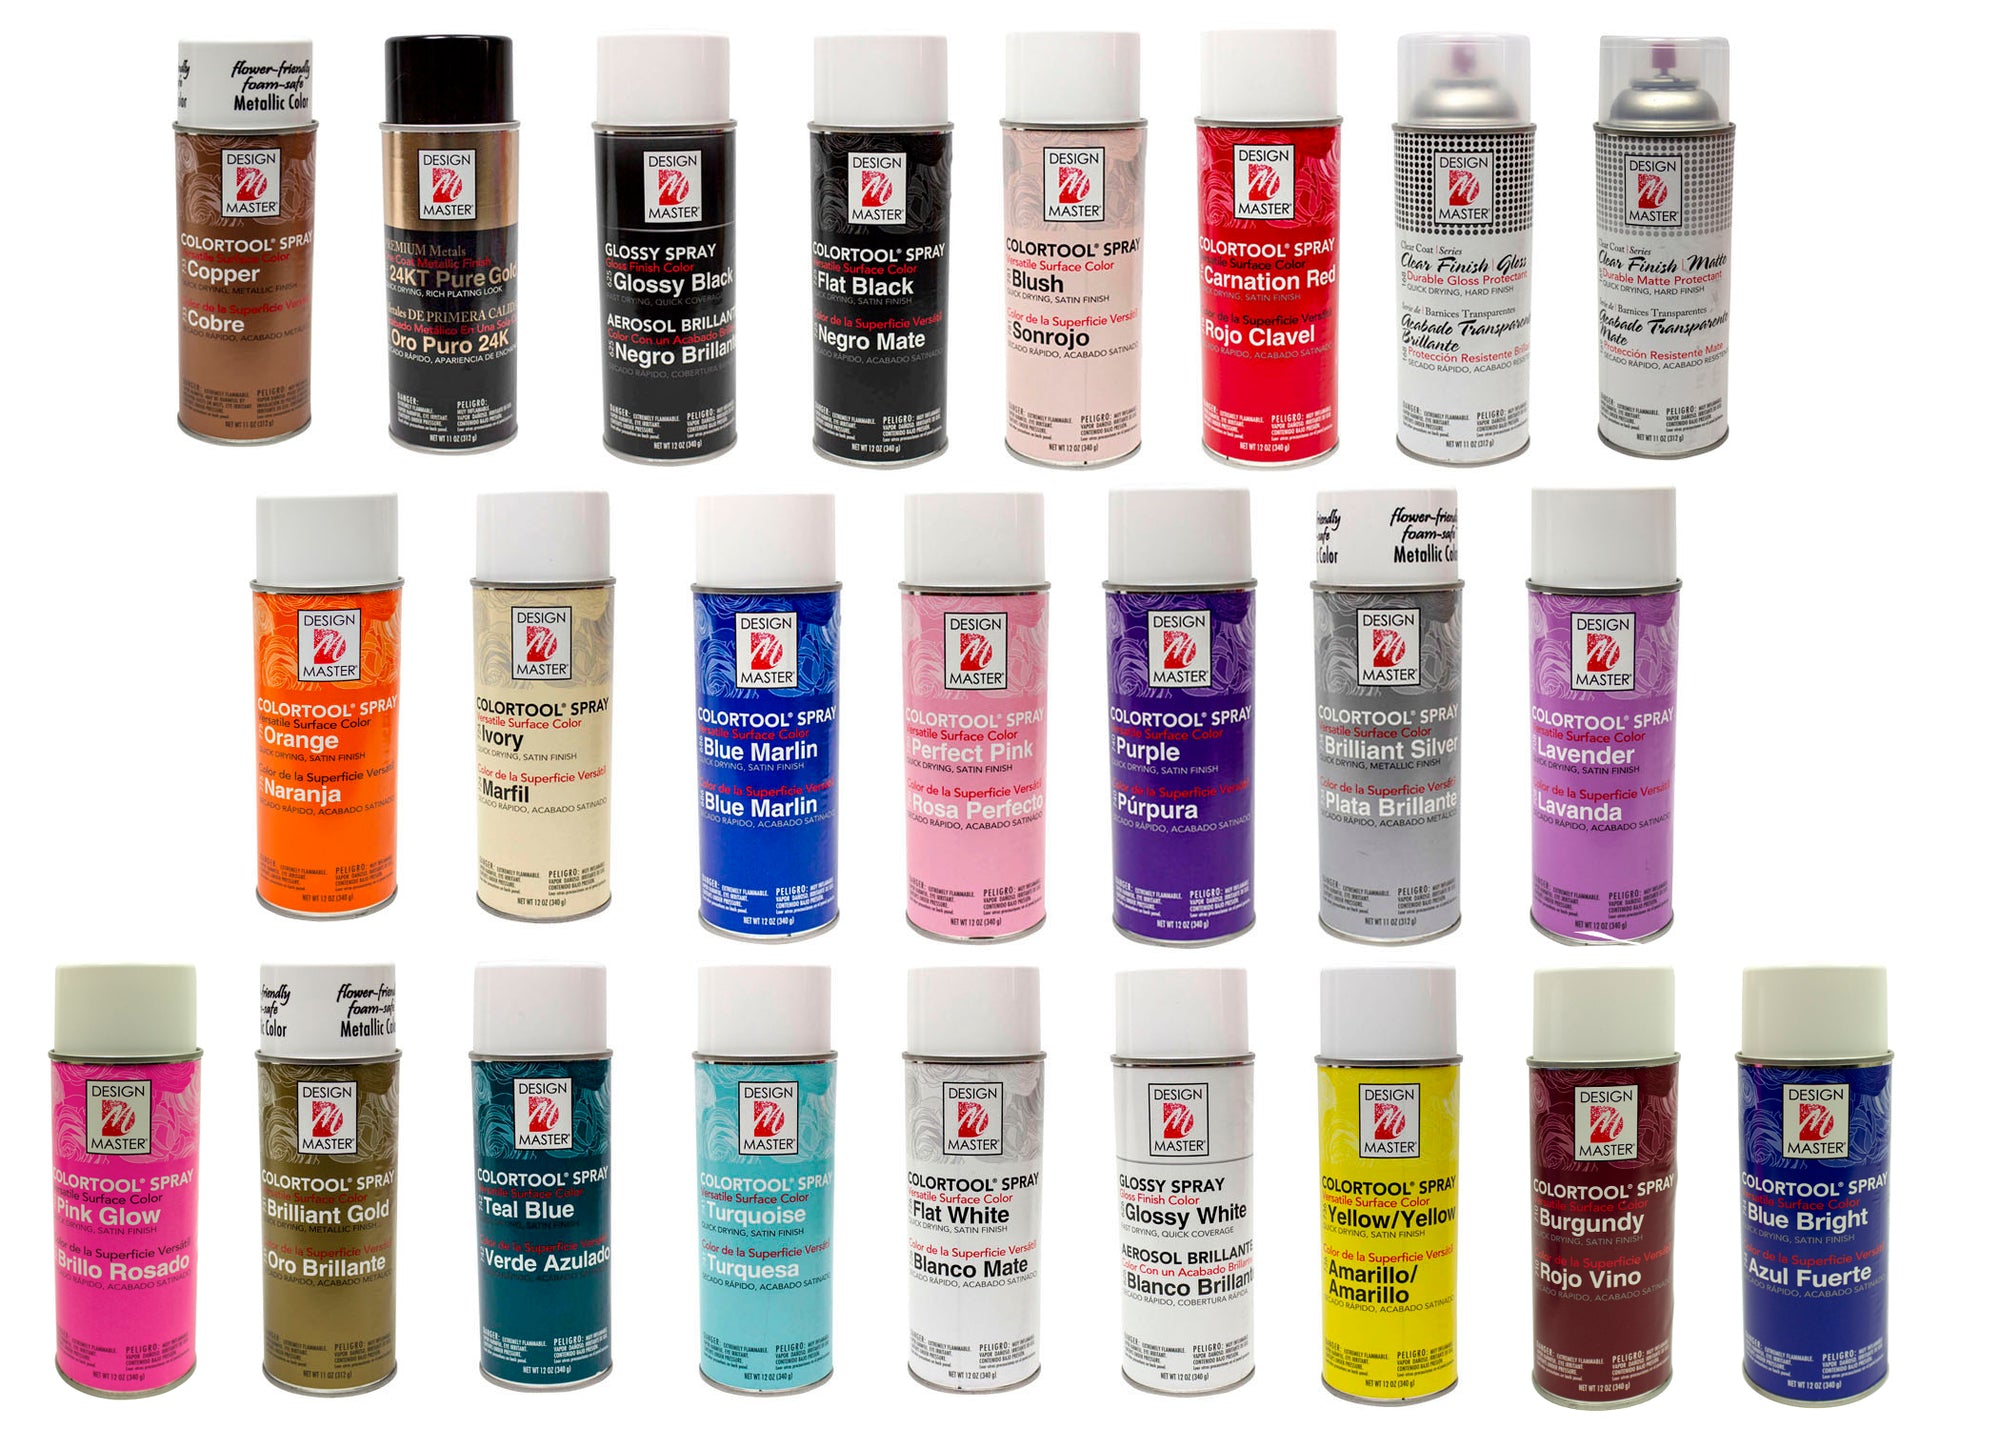 Design Master Colortool Sprays